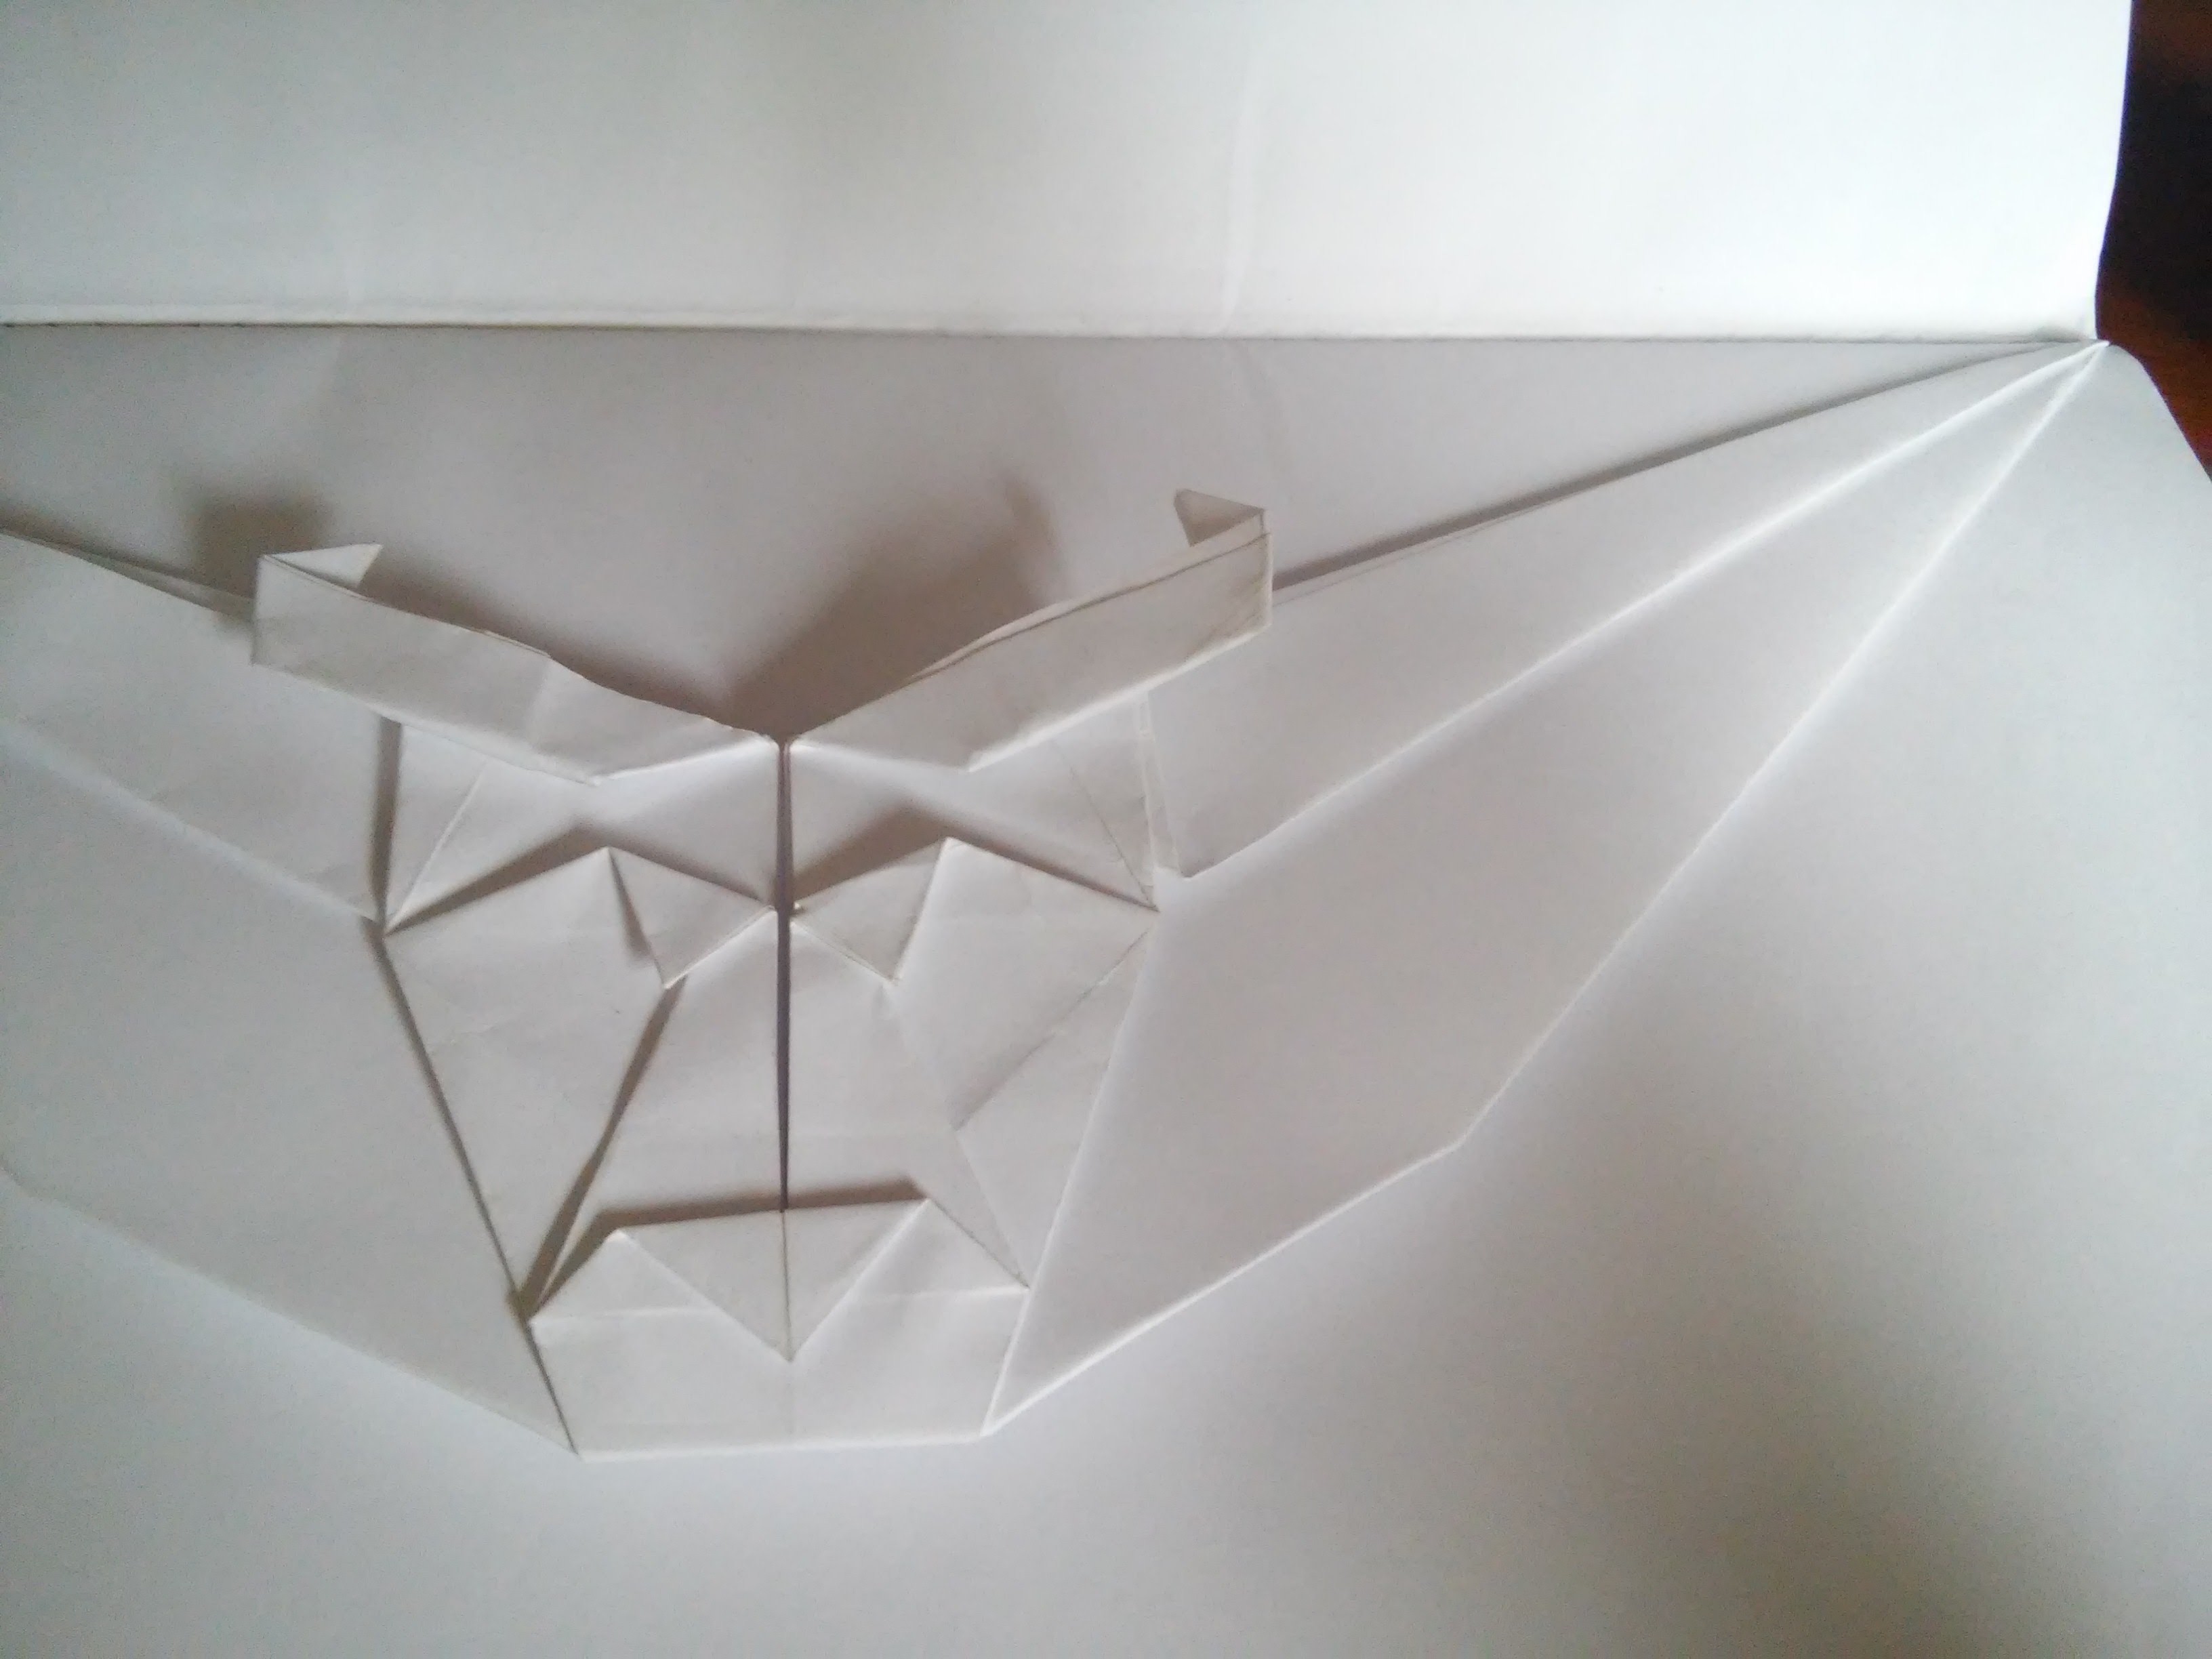 Cara de toro de origami - Scorpion 2.4